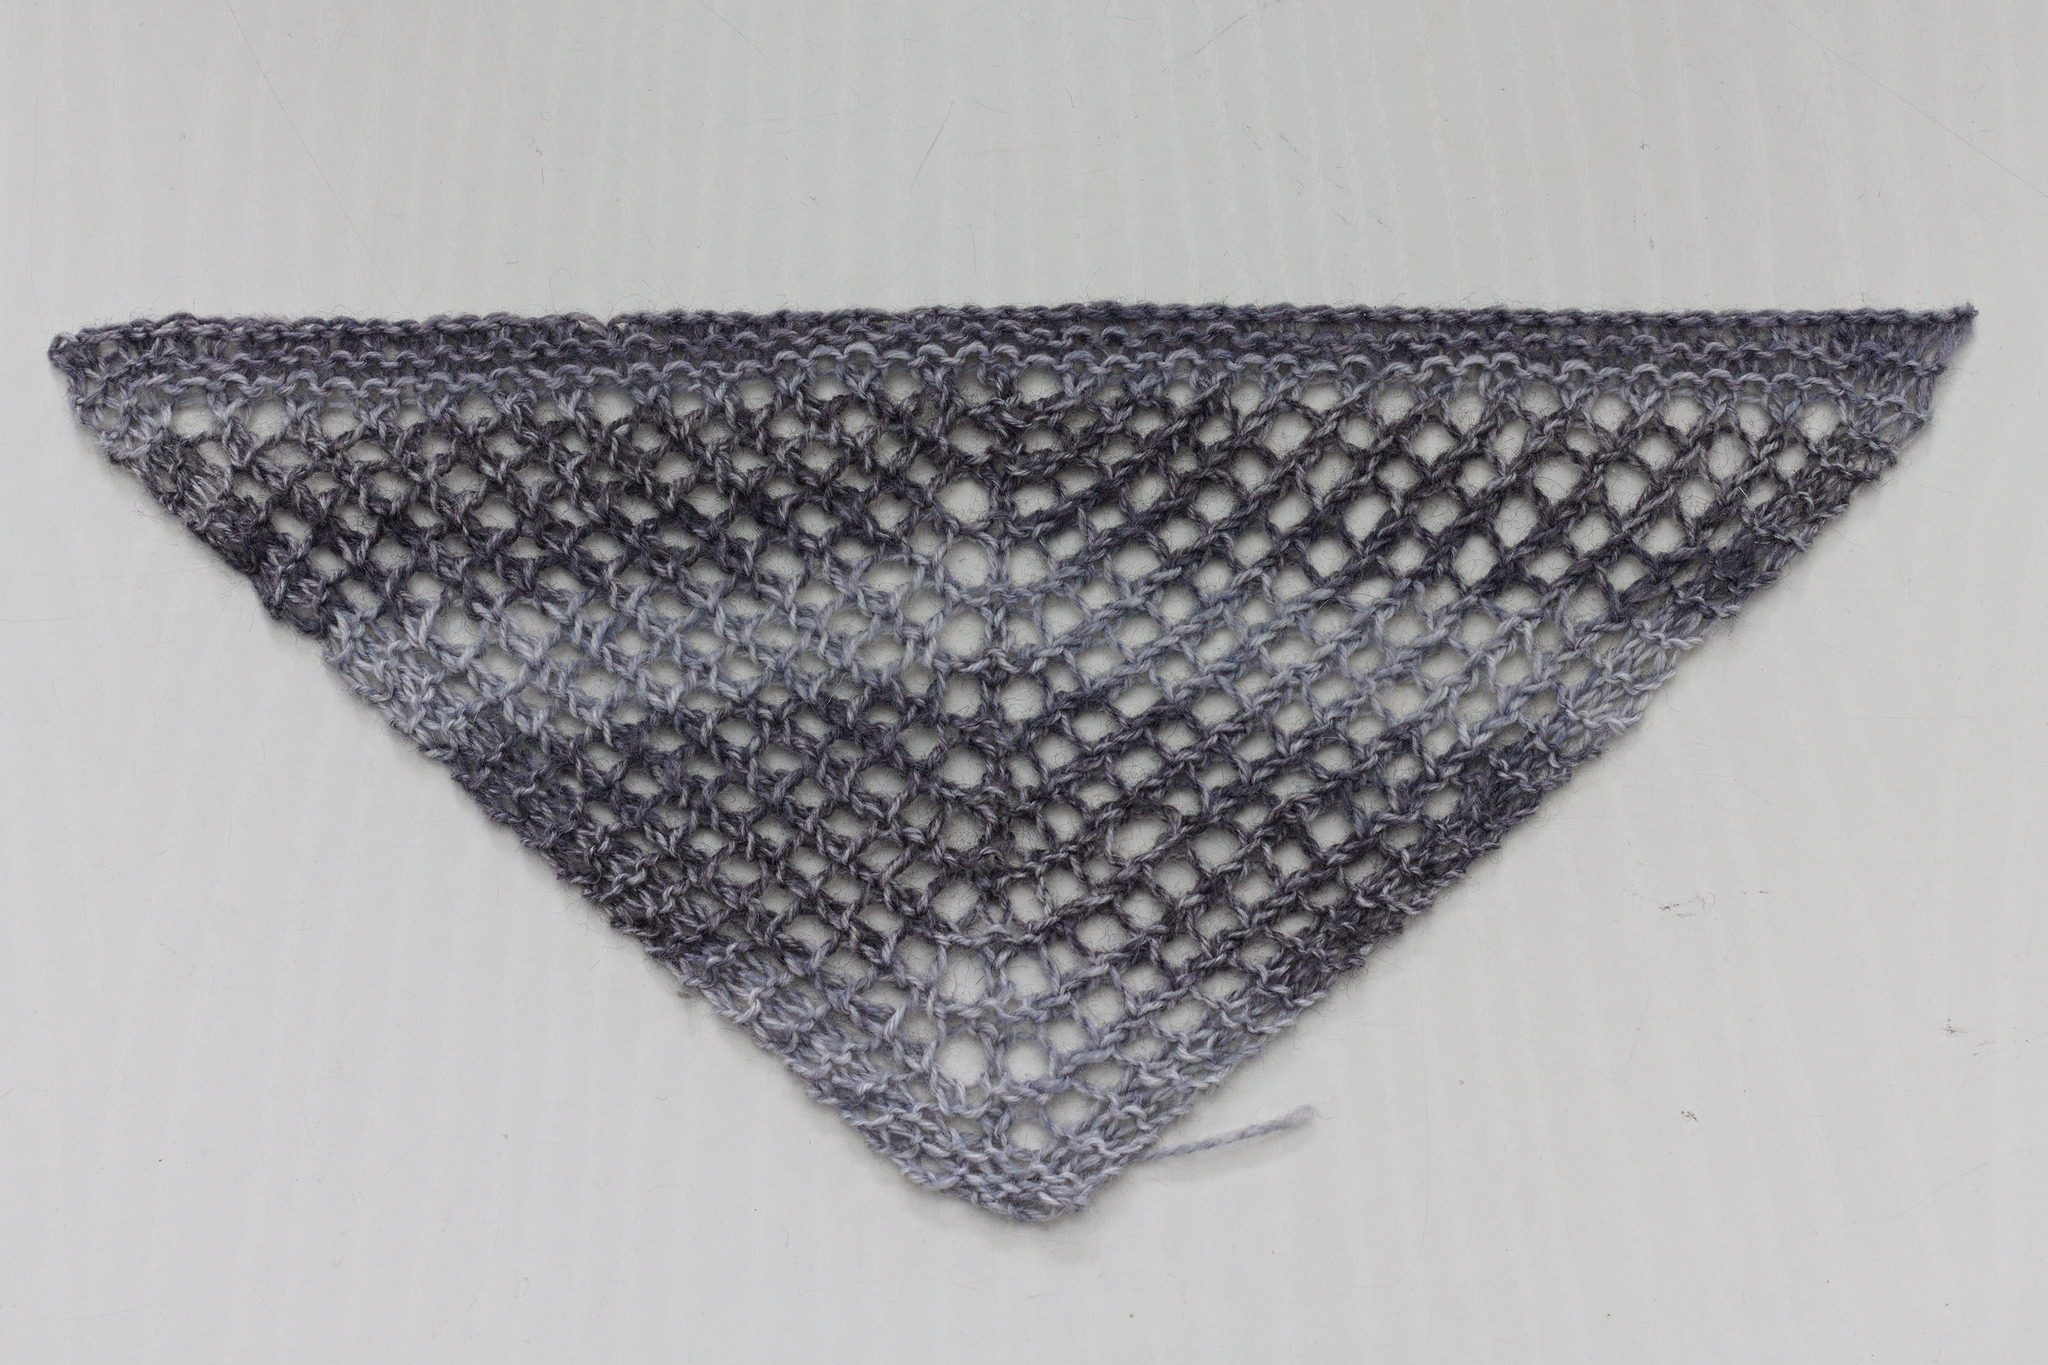 A mini-shawl in self-striping gray yarn.